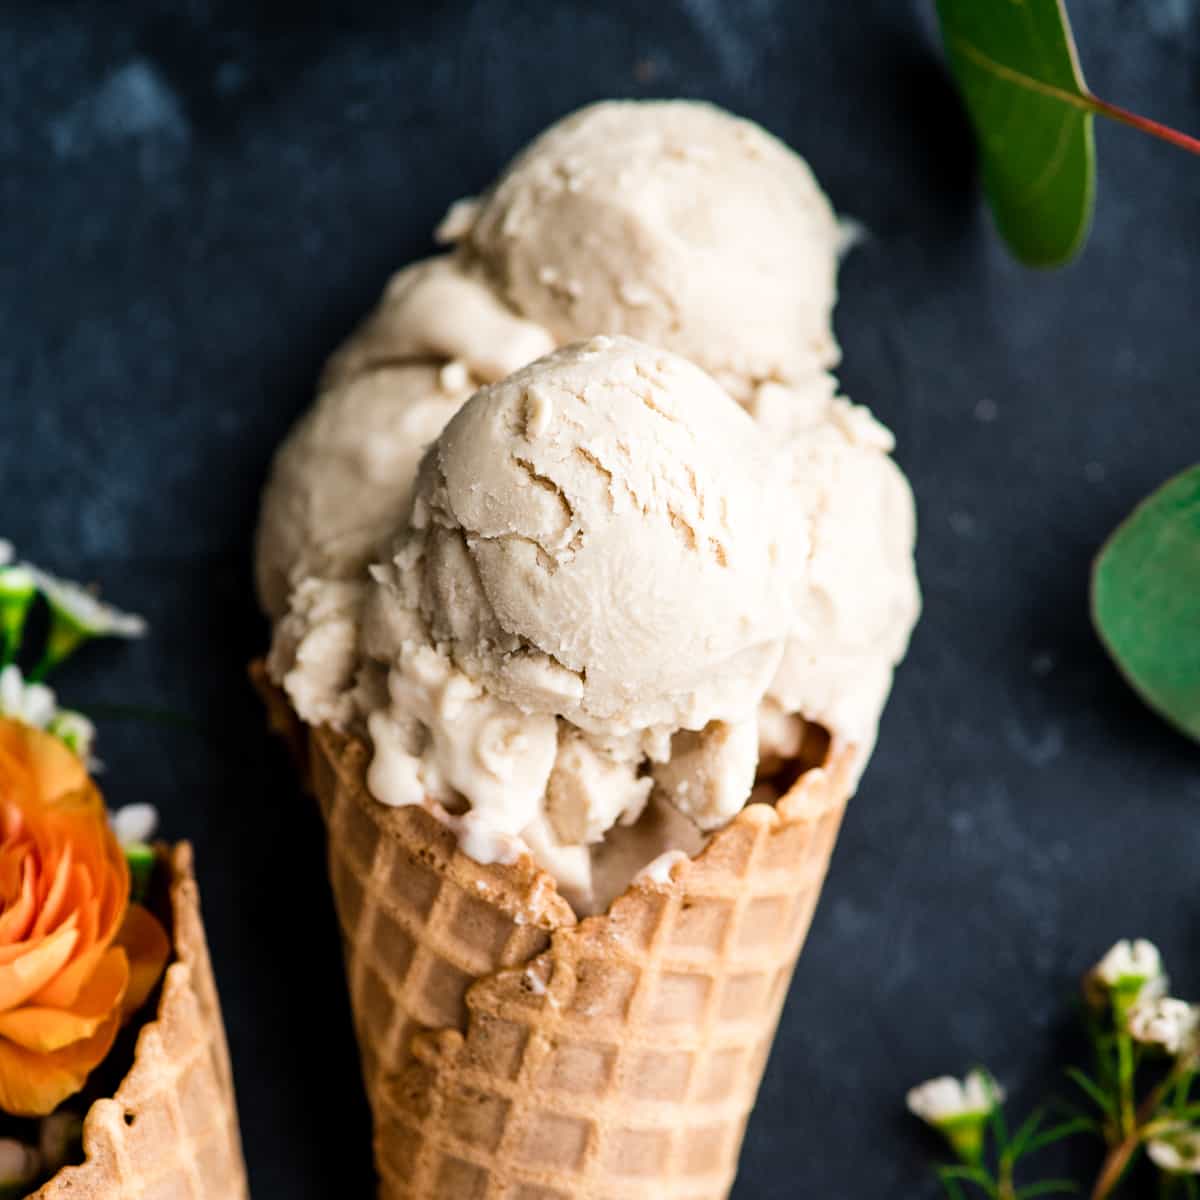 Dairy-Free Vanilla Ice Cream (Vegan) - The Roasted Root